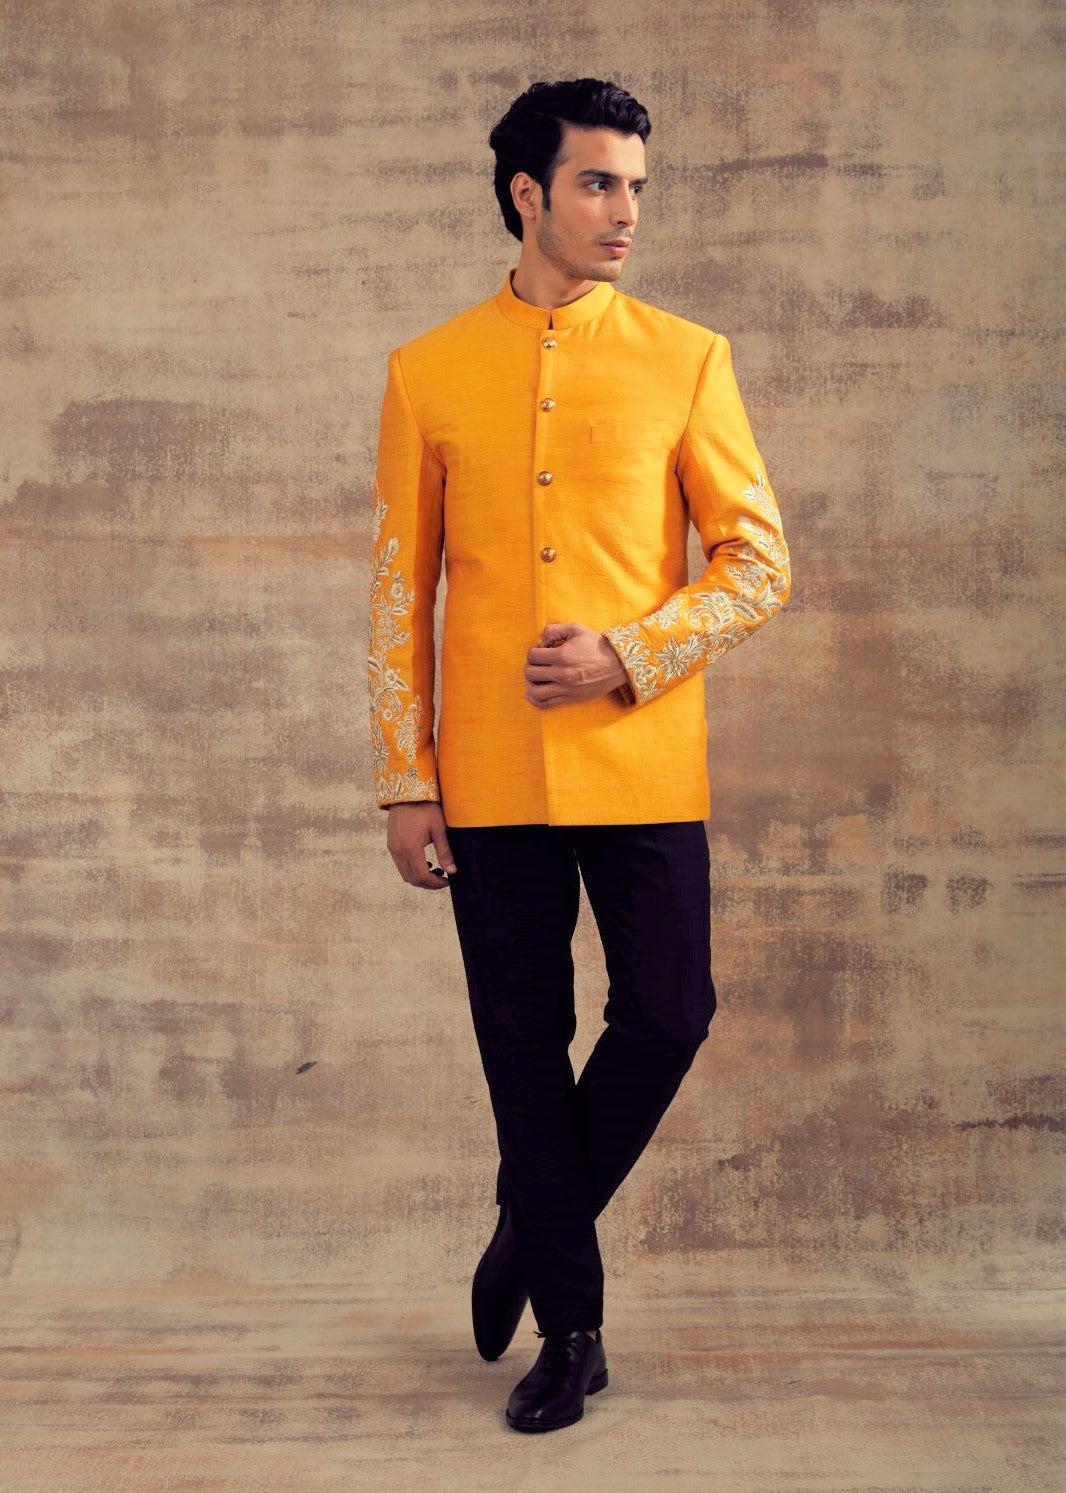 Mustard Yellow Jodhpuri Jacket With Embroidered Sleeves